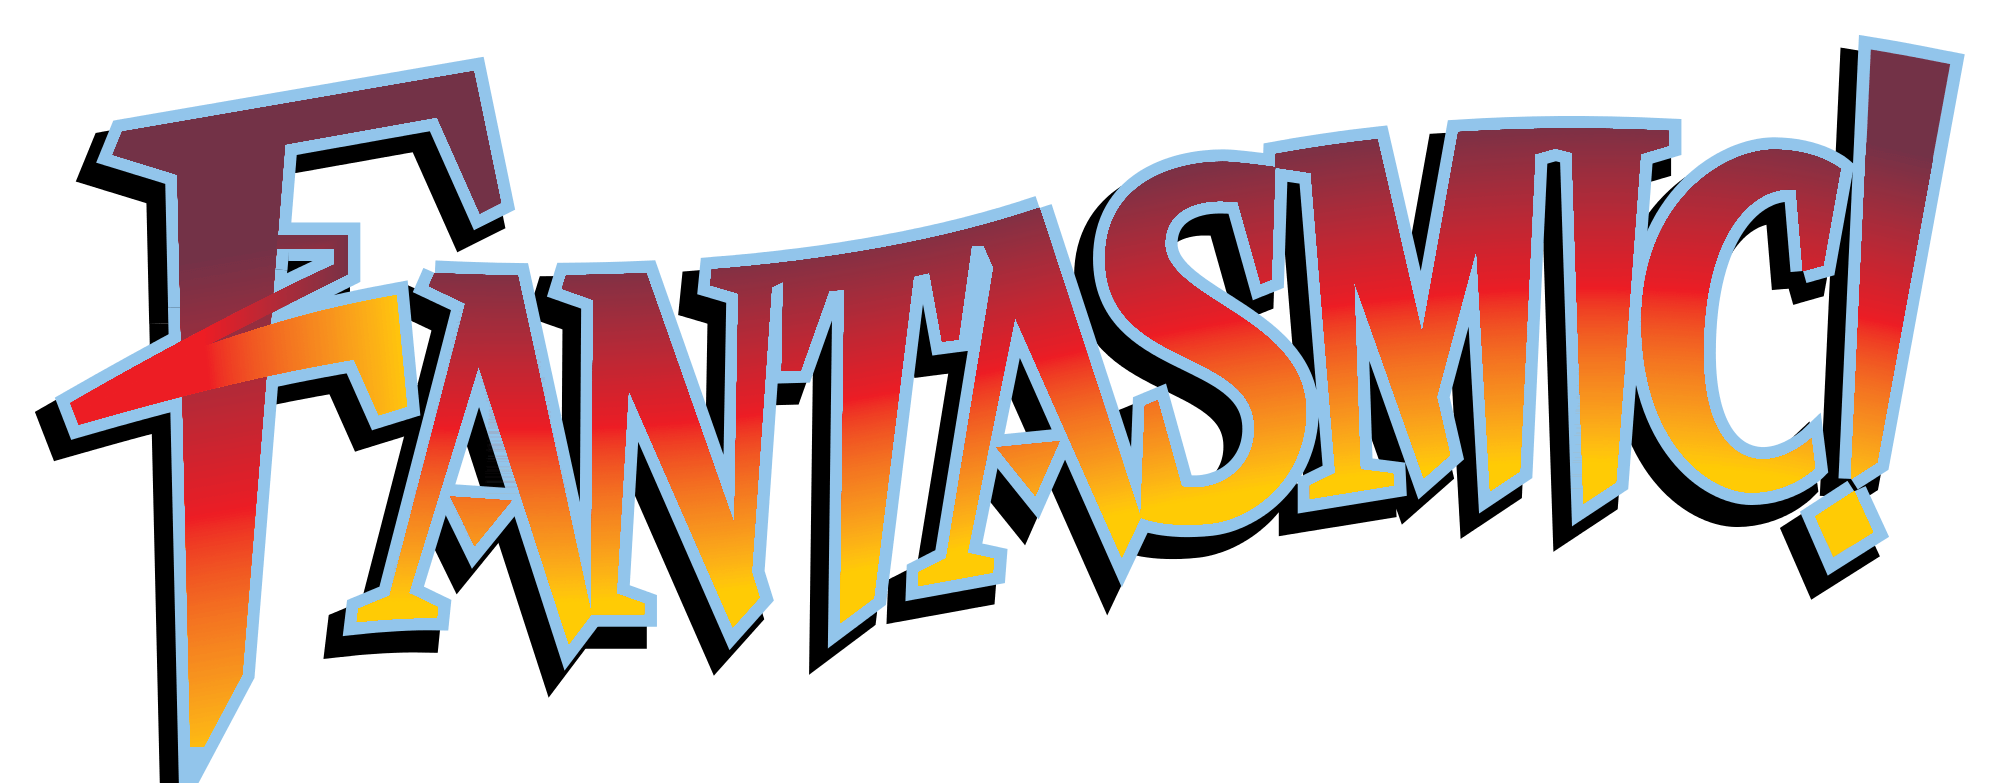 Fantastmic Logo - Fantasmic! Logo.svg